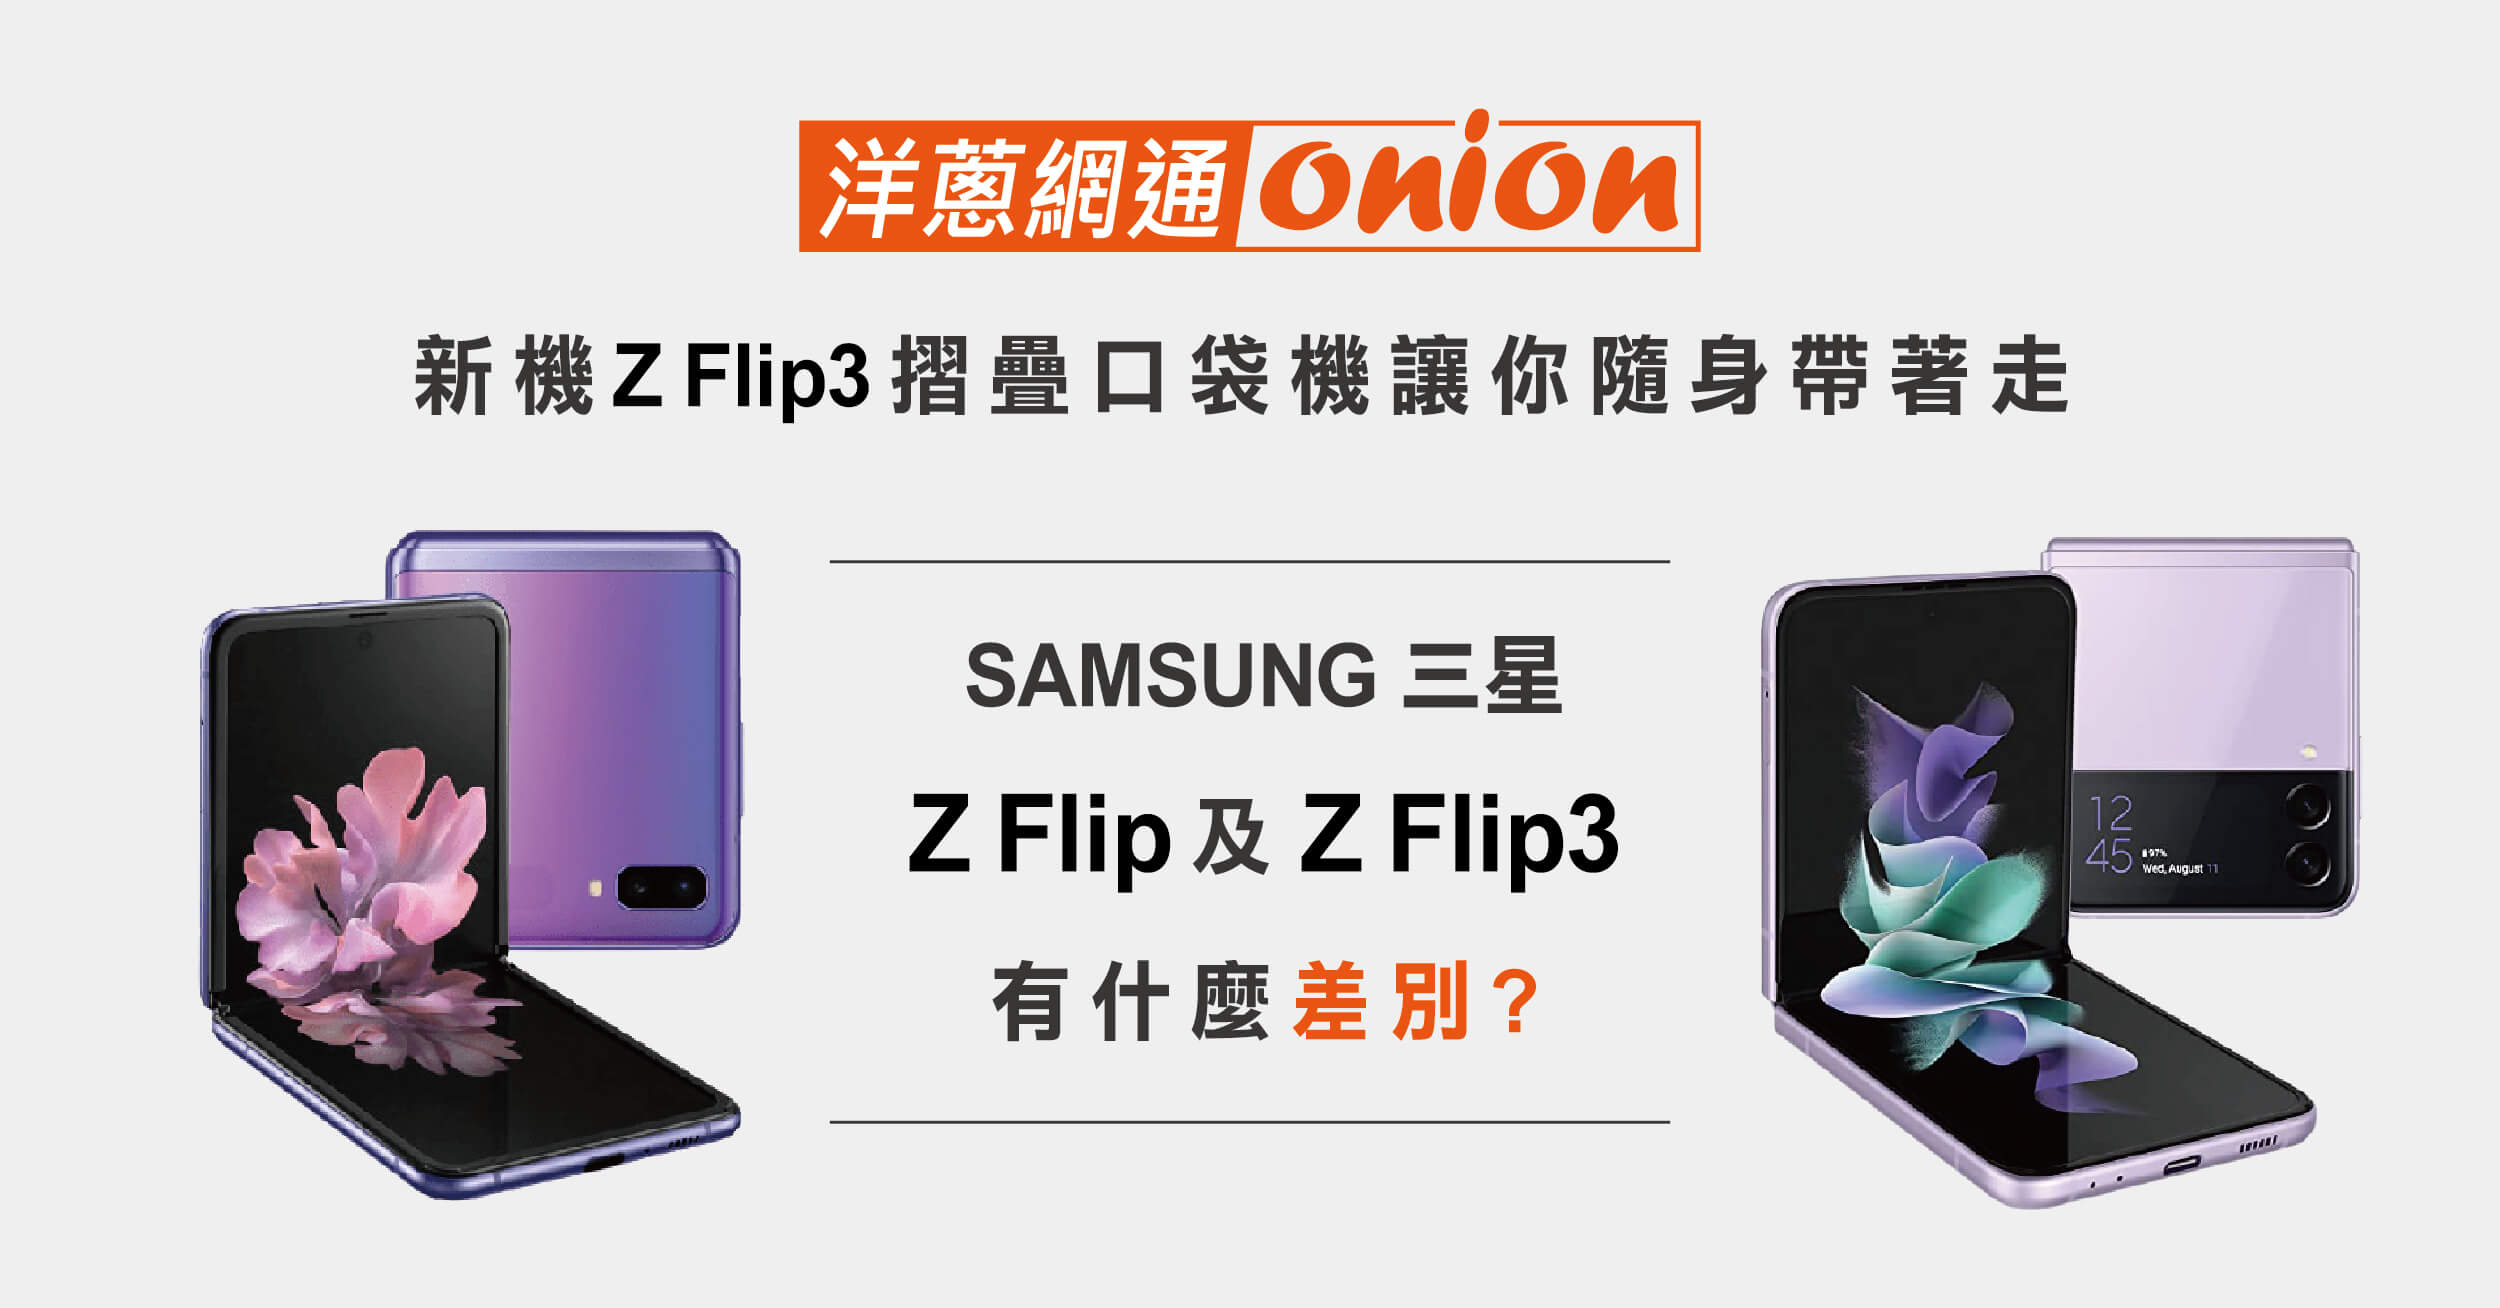 SAMSUNG三星Z Flip3及Flip有什麼差別? 新機Z Flip3摺疊口袋機讓你隨身帶著走